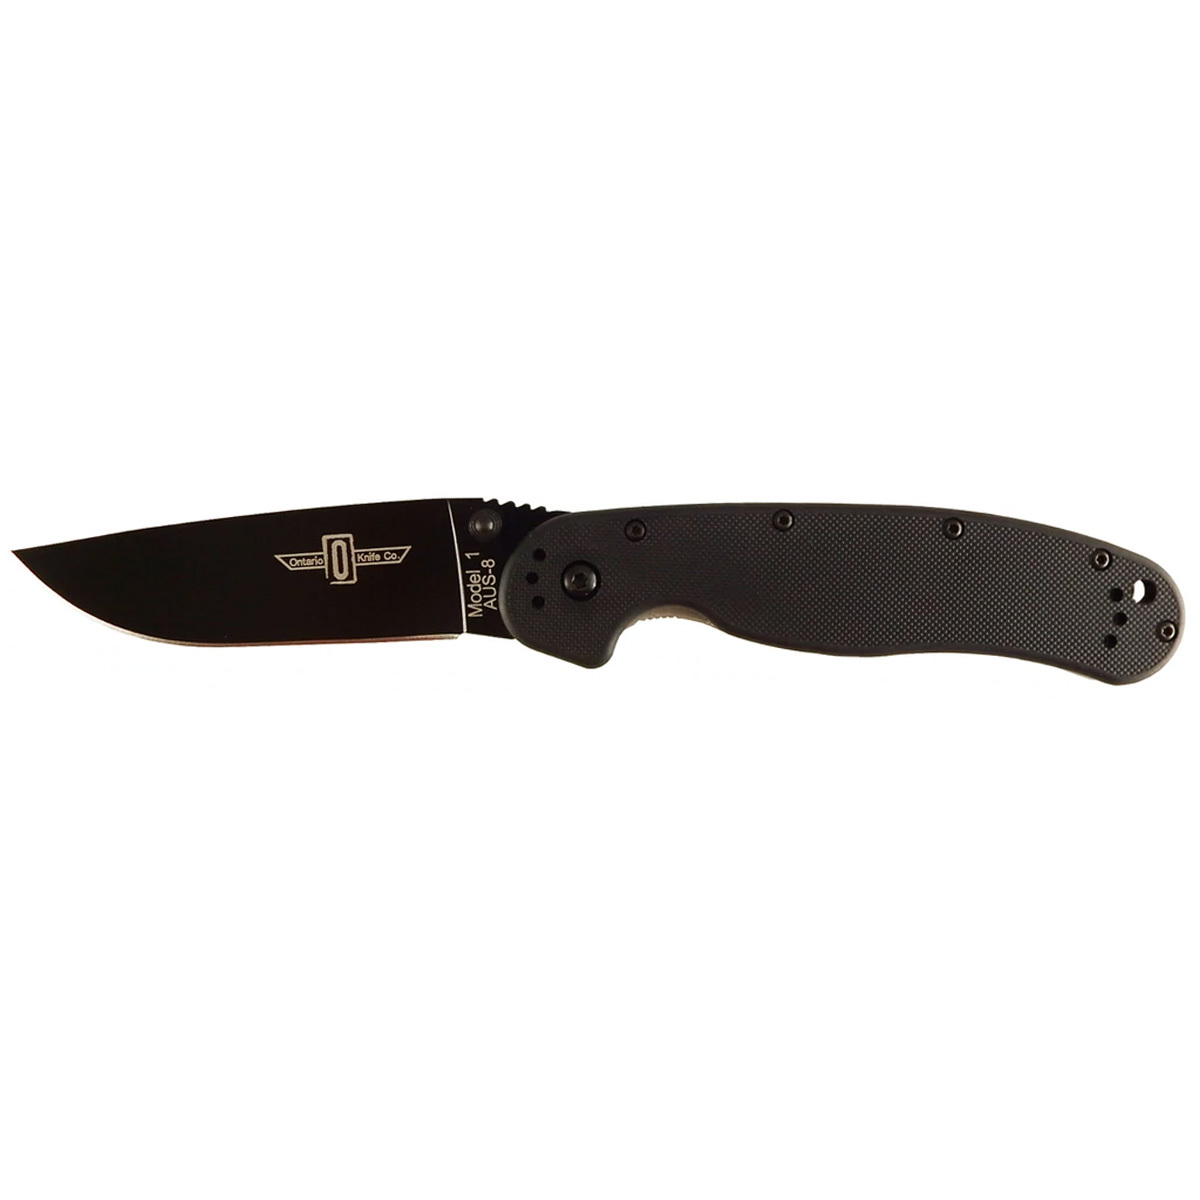 Нож Ontario 8846 RAT 1 Black полуавтоматический складной нож ontario rat 1a assisted black blade desert tan g 10 handle